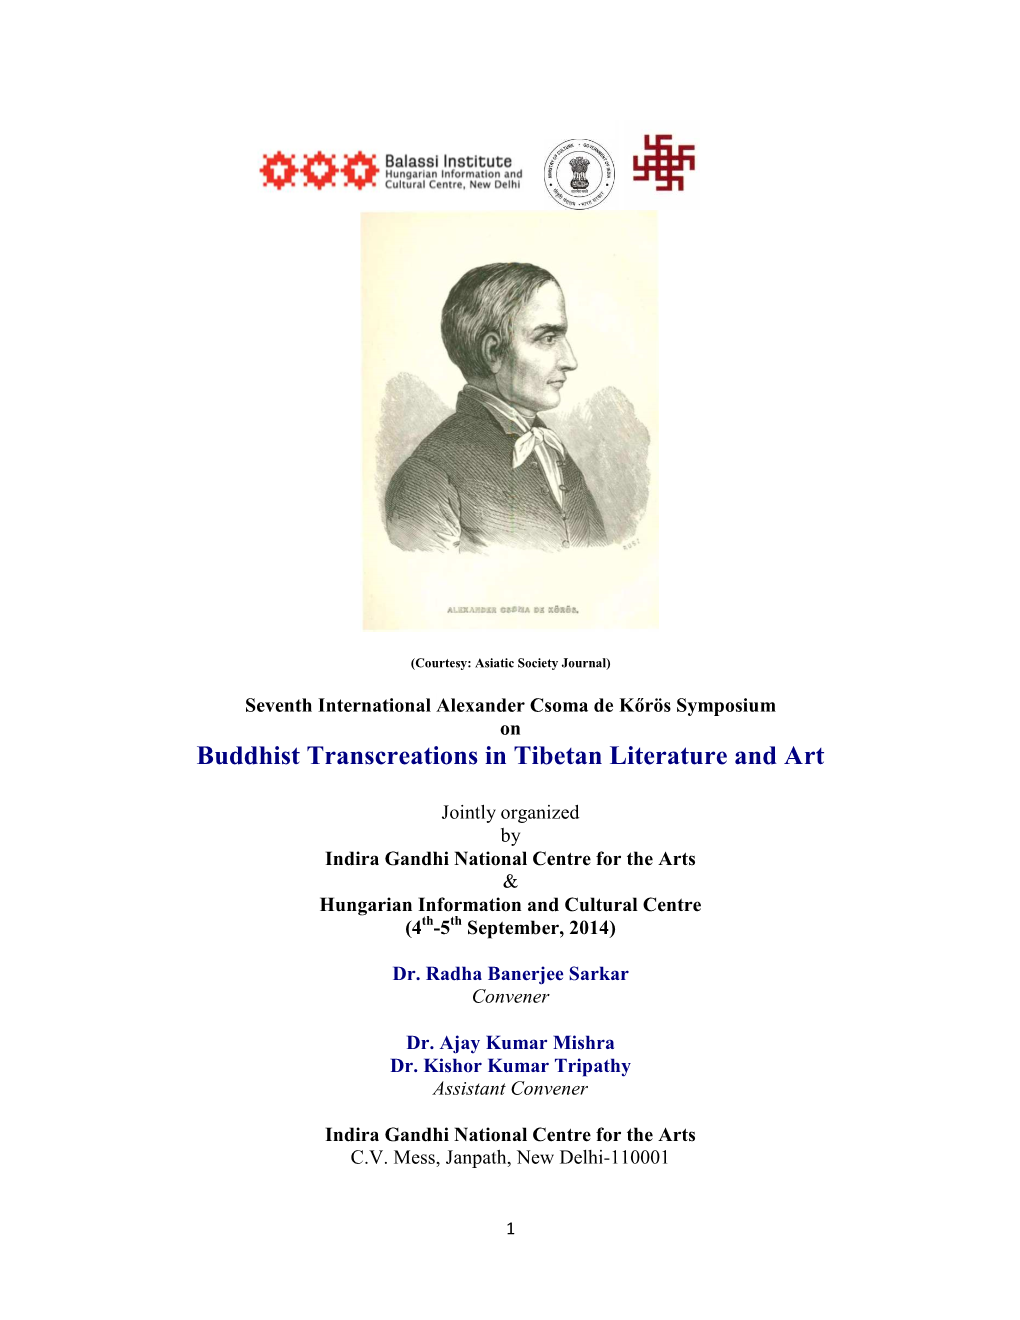 Souvenir-'Buddhist Transcreations in Tibetan Literature and Art'